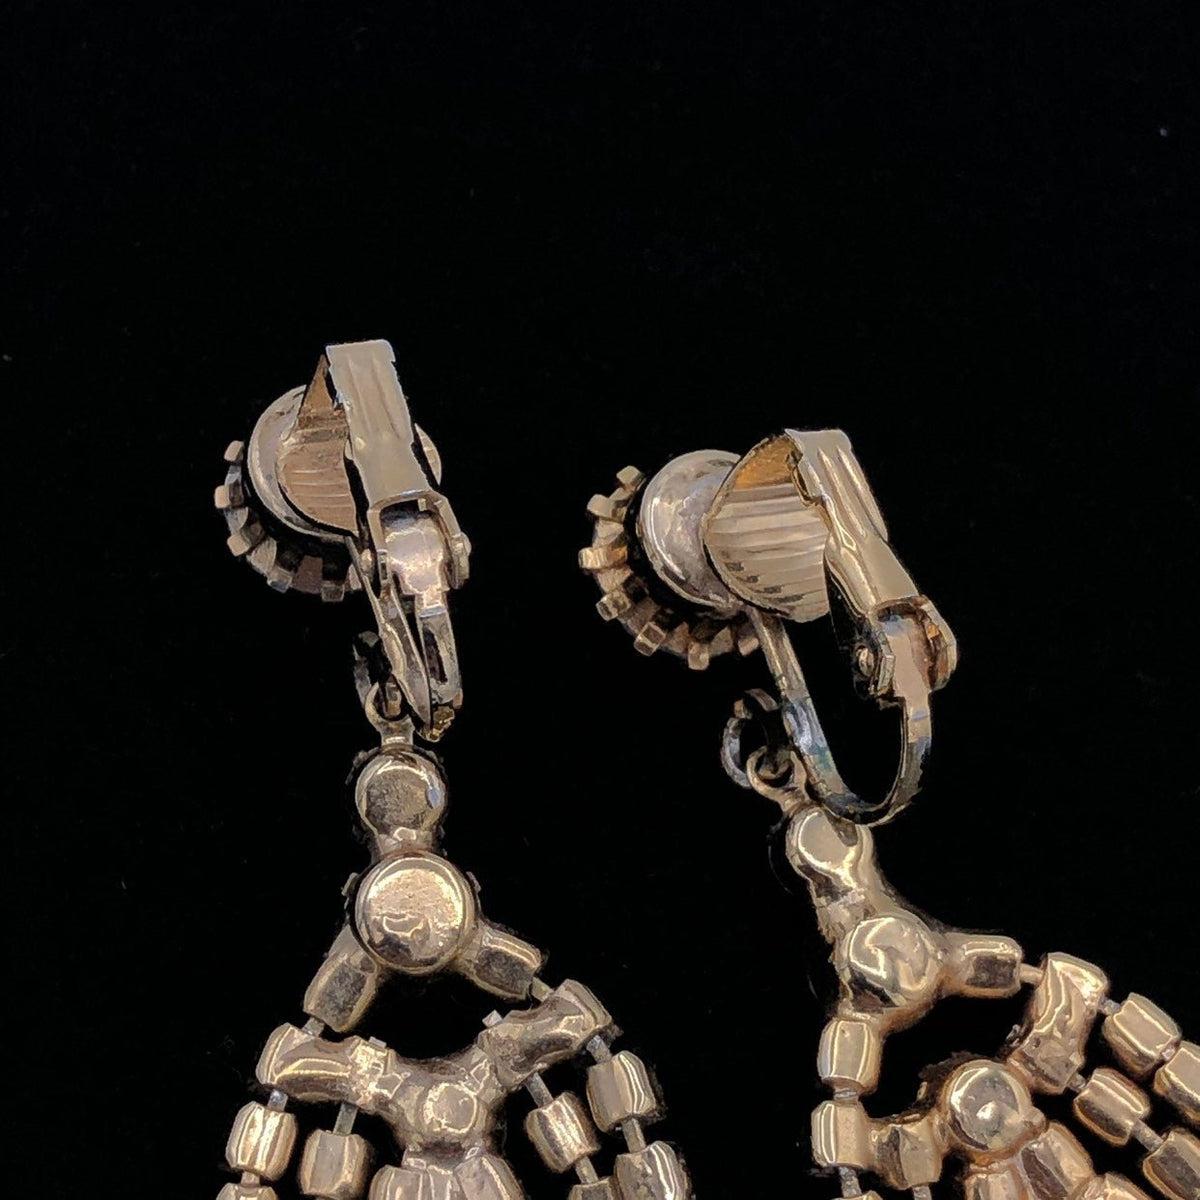 Statement Rhinestone Chandelier Vintage Clip-On Earrings - 24 Wishes Vintage Jewelry